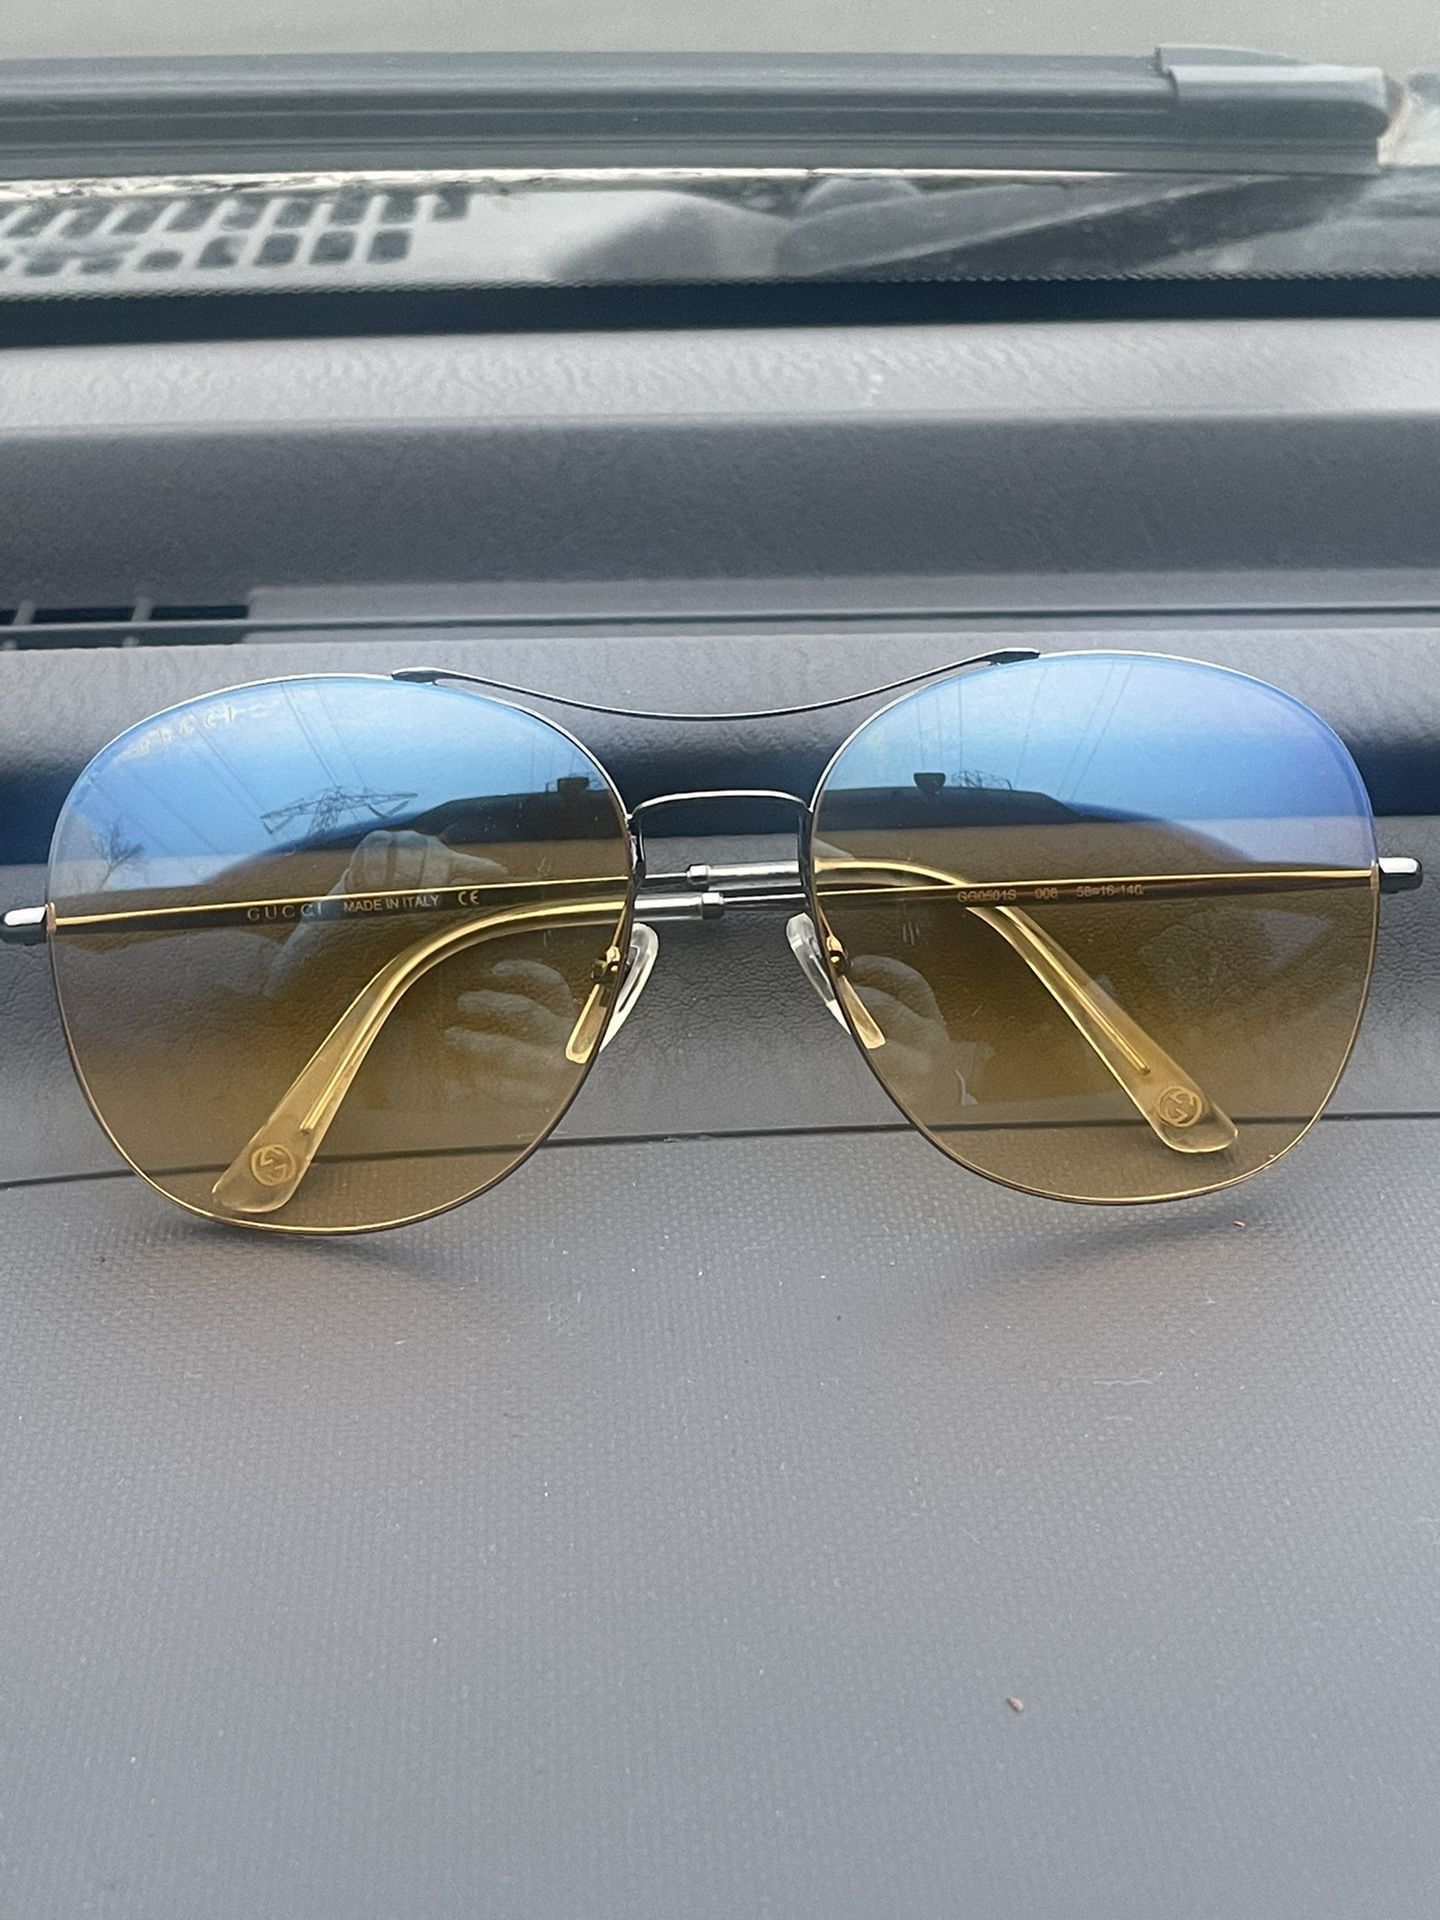 Gucci Silver & Yellow GG0501S 55mm Aviator Sunglasses for Sale in